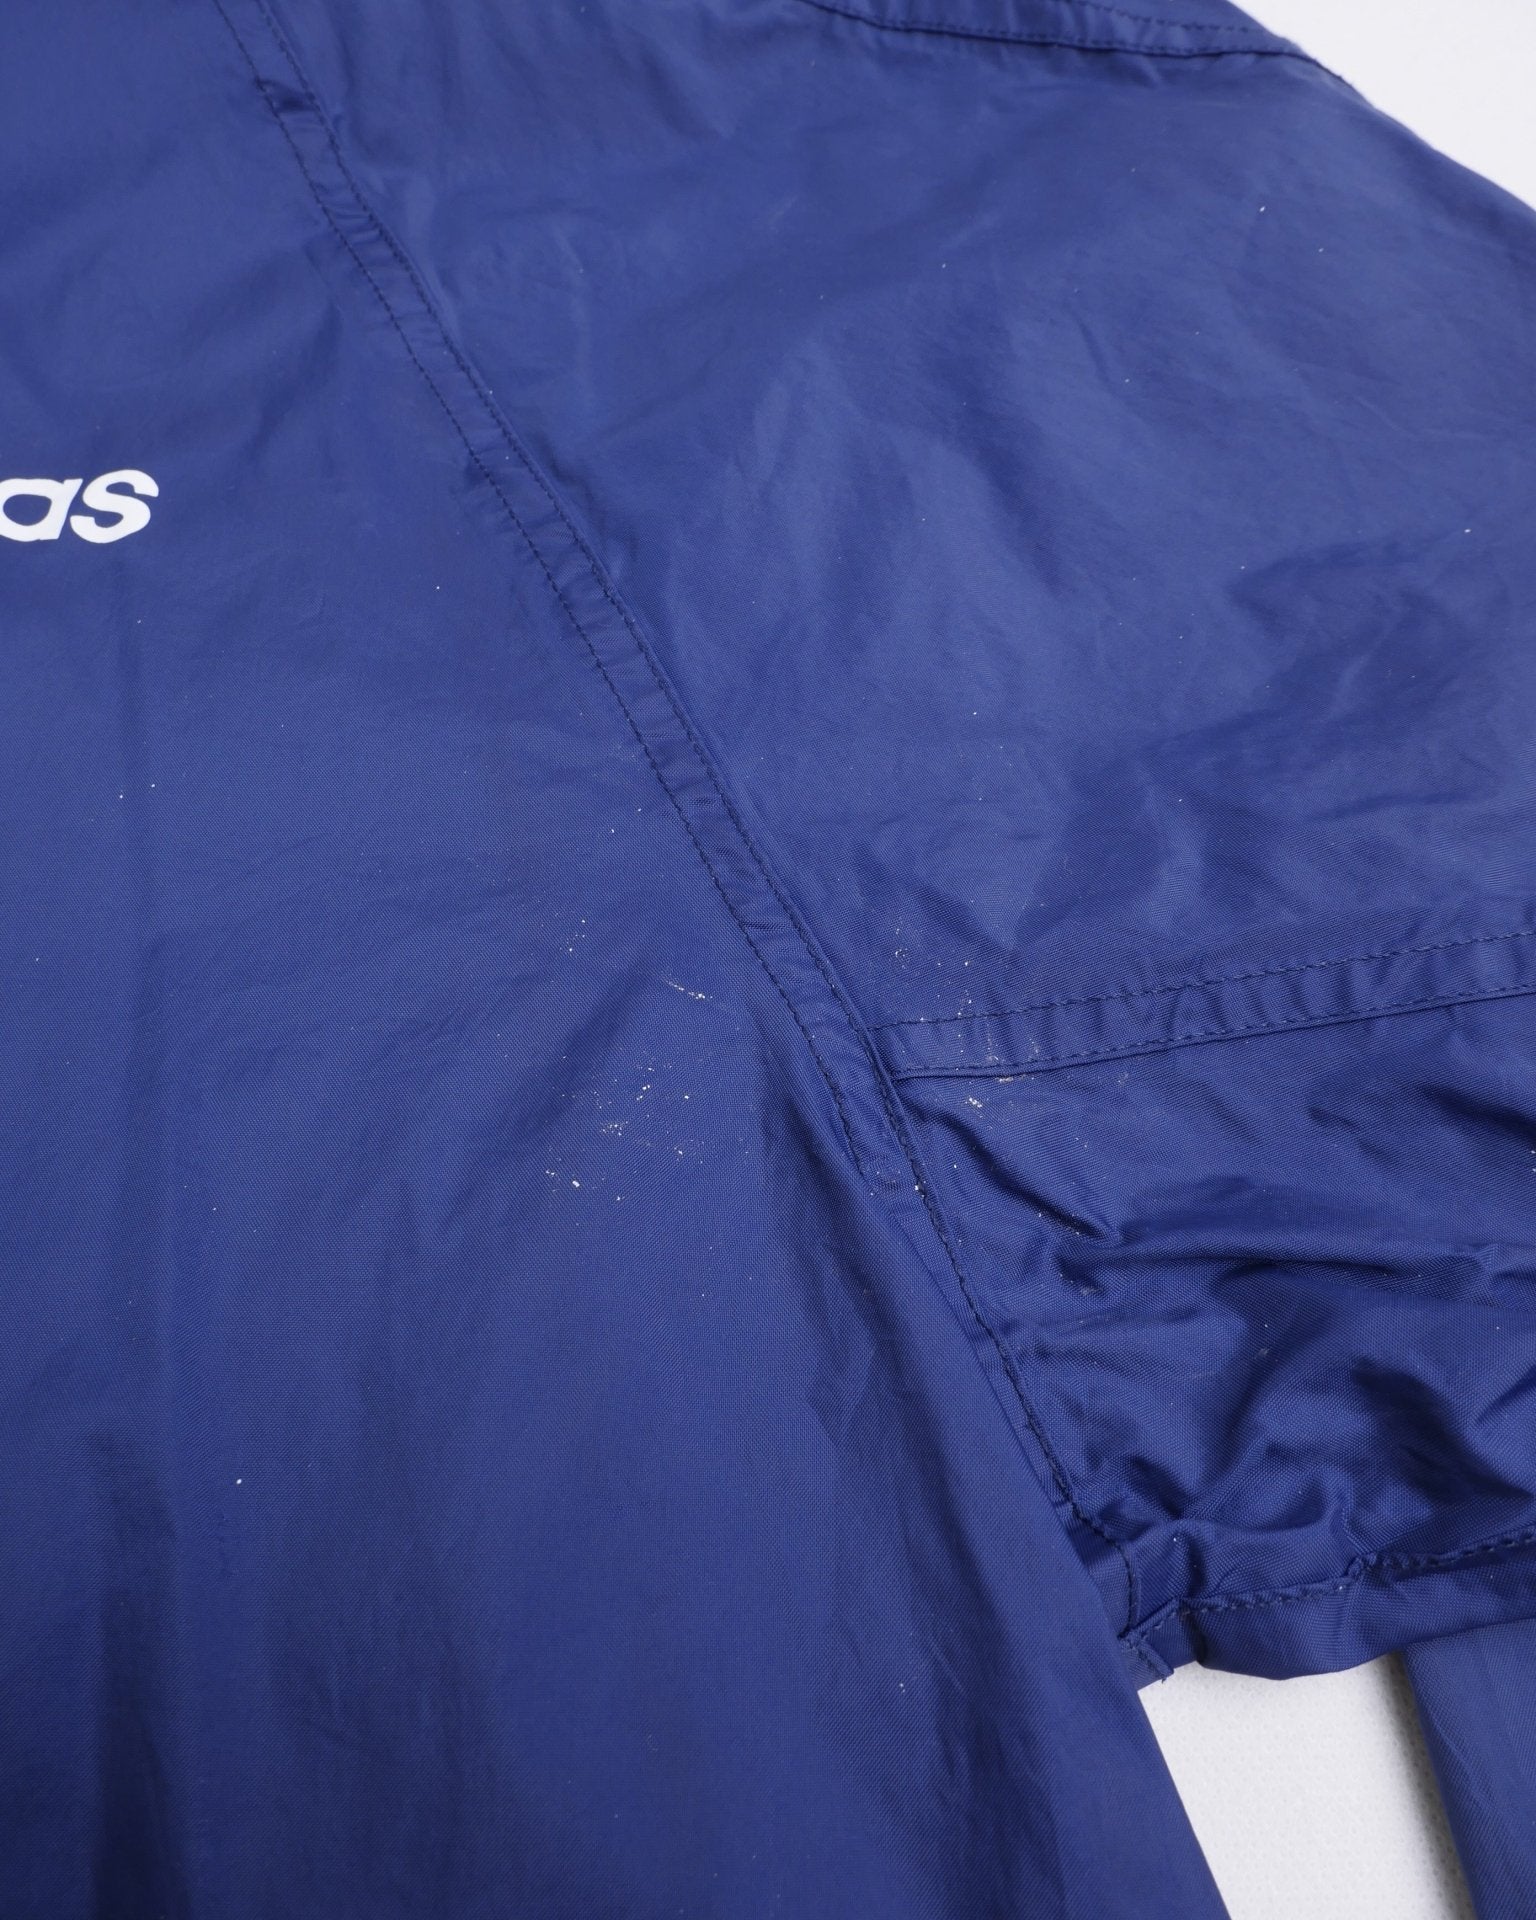 Adidas printed Logo blue Track Jackets - Peeces